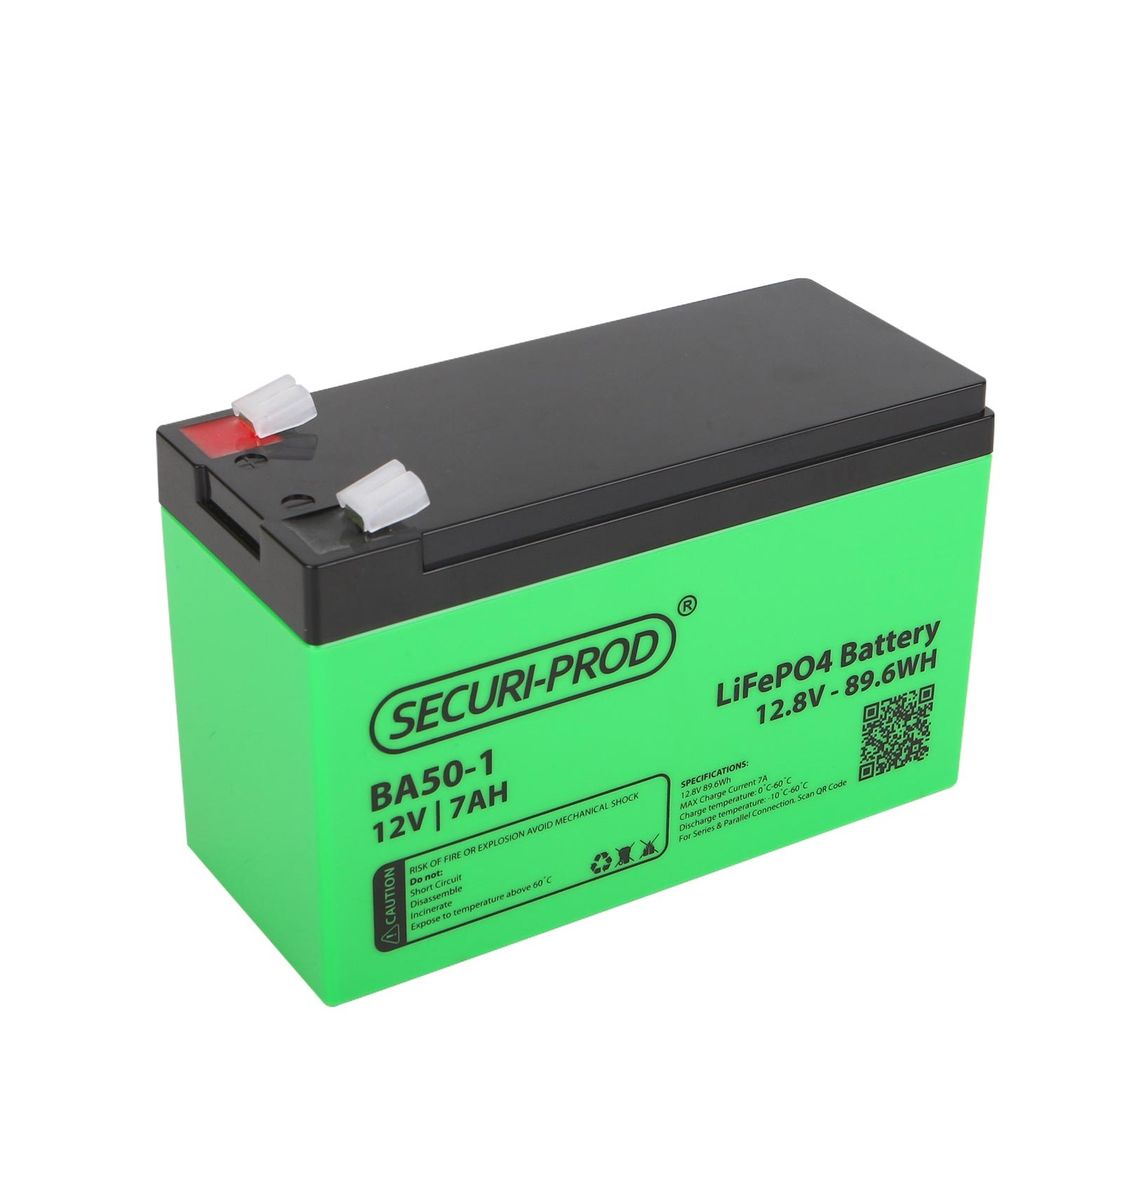 Securi-Prod 12V 7Ah Alarm/Gate Lithium Battery | Buy Online in South ...